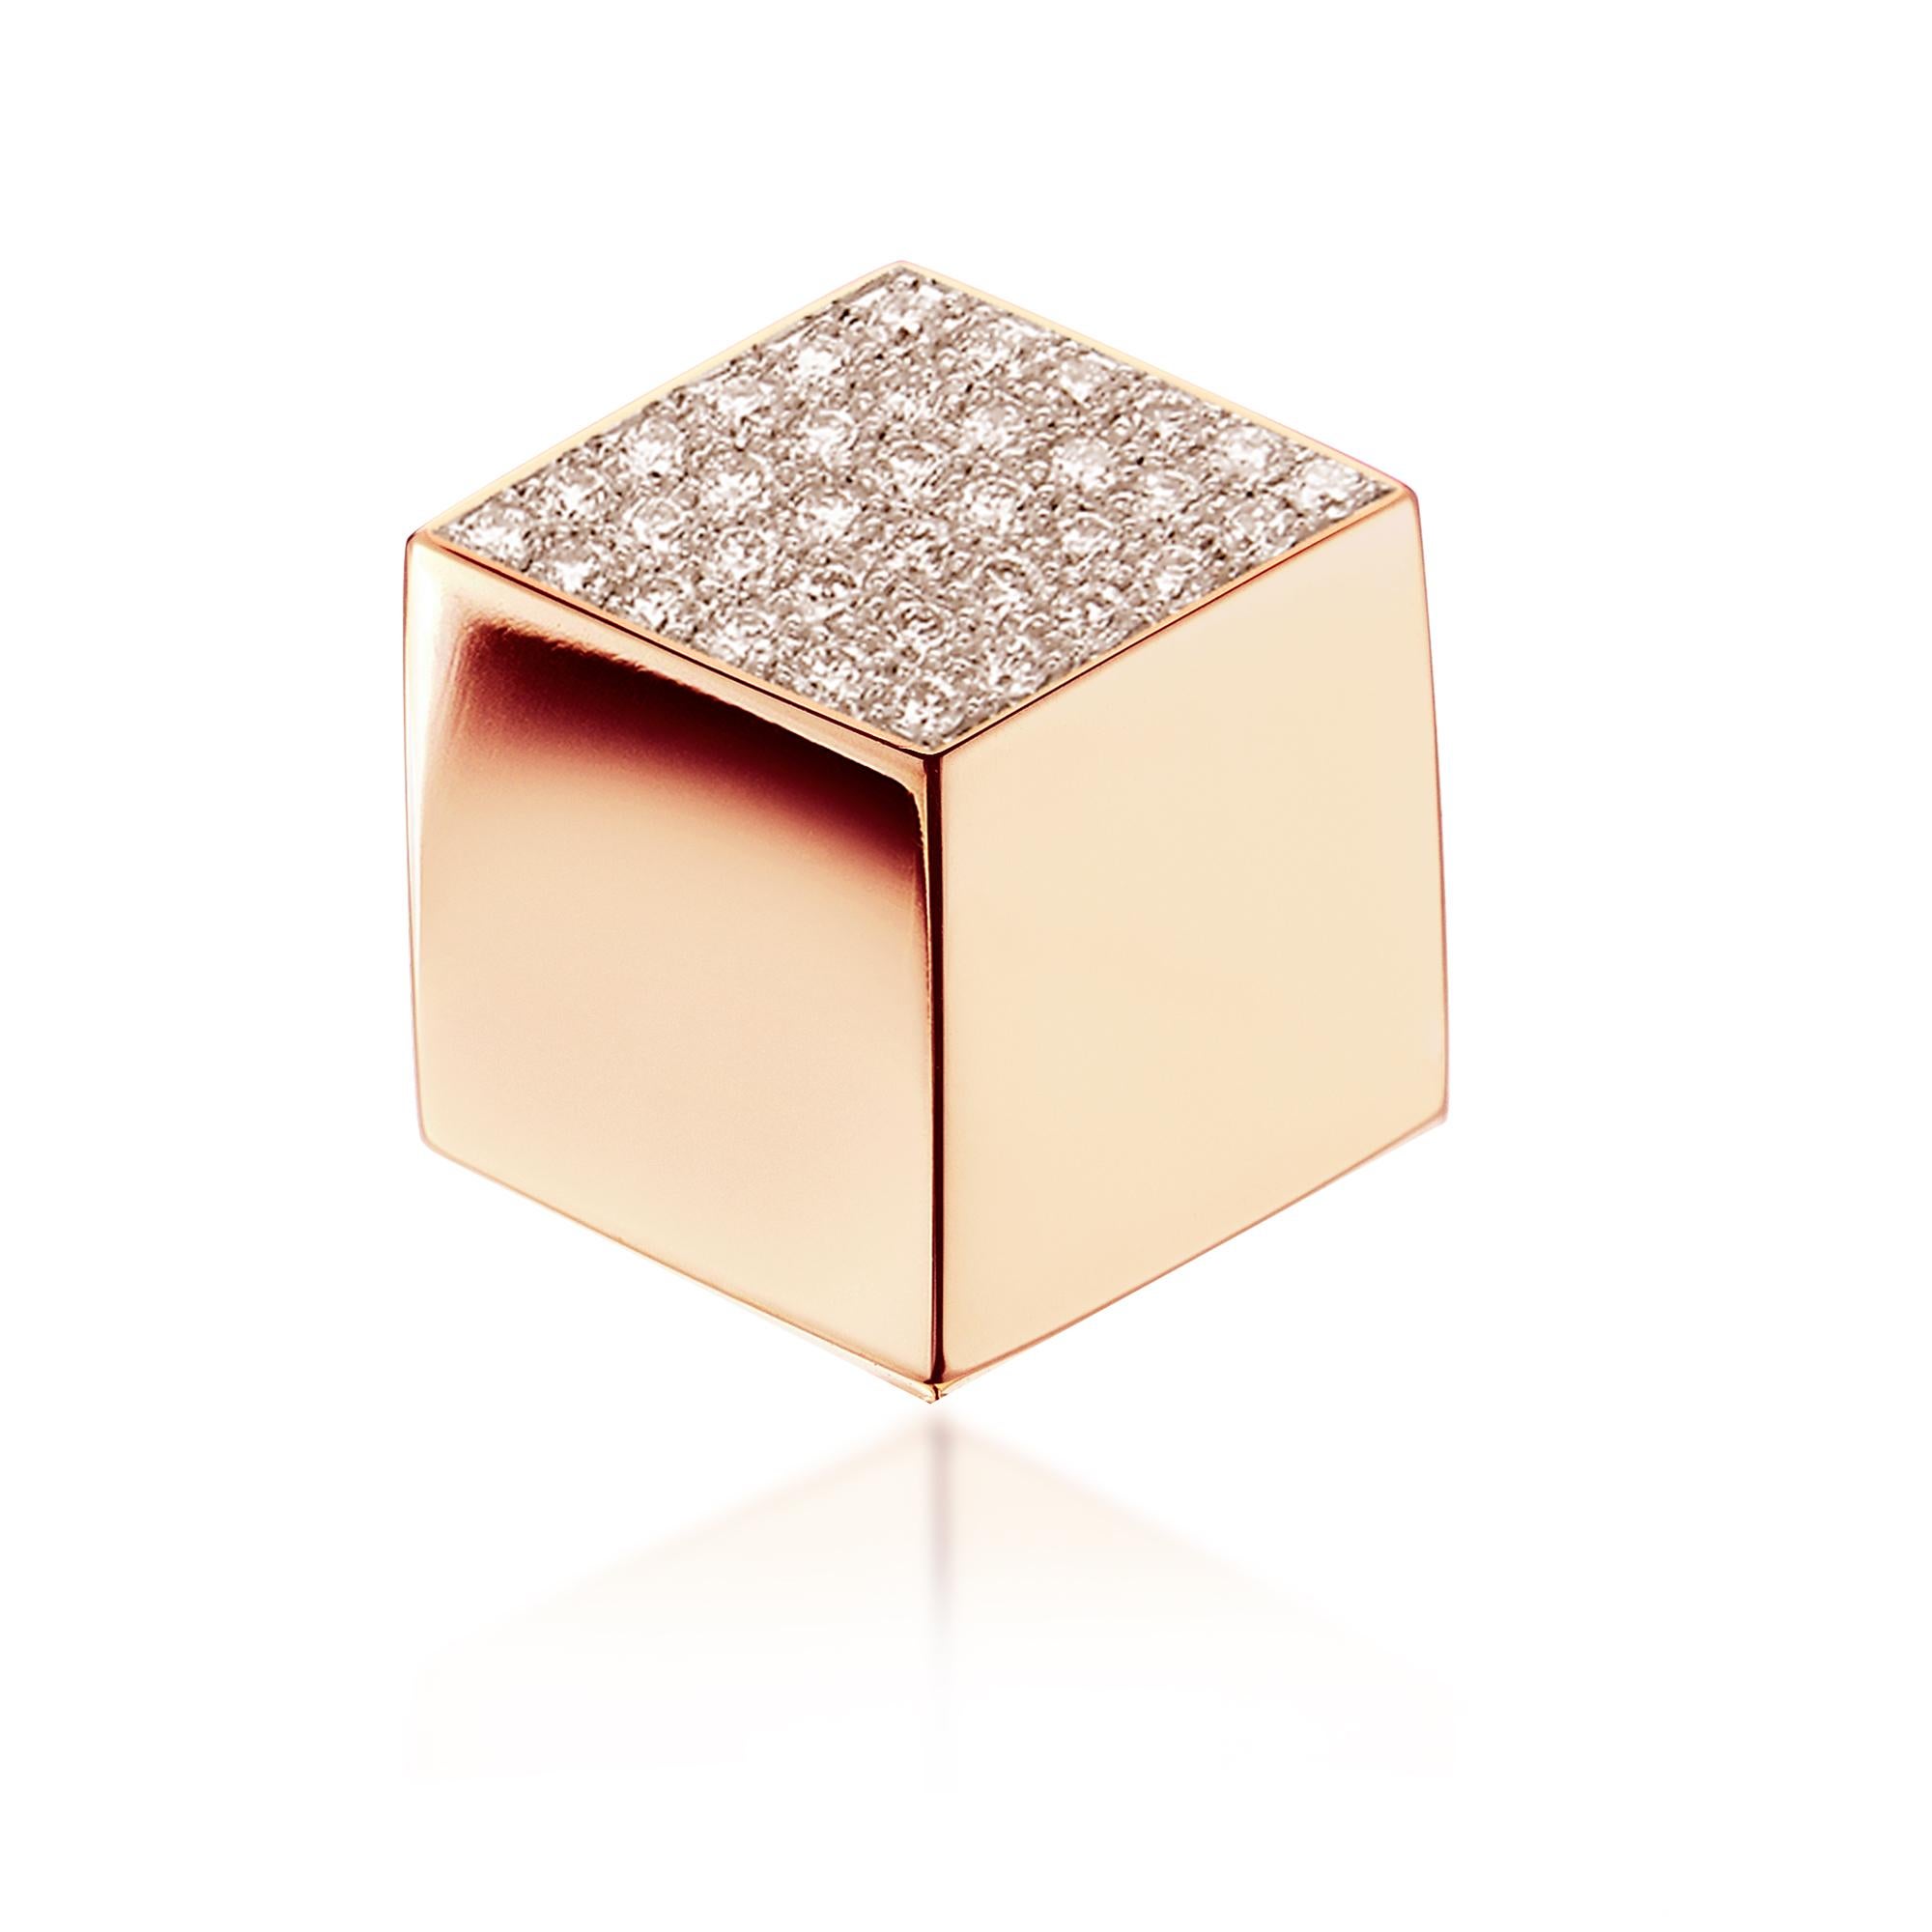 Contemporary Paolo Costagli 18 Karat Rose Gold Brillante Earrings with Diamonds, 0.96 Carat